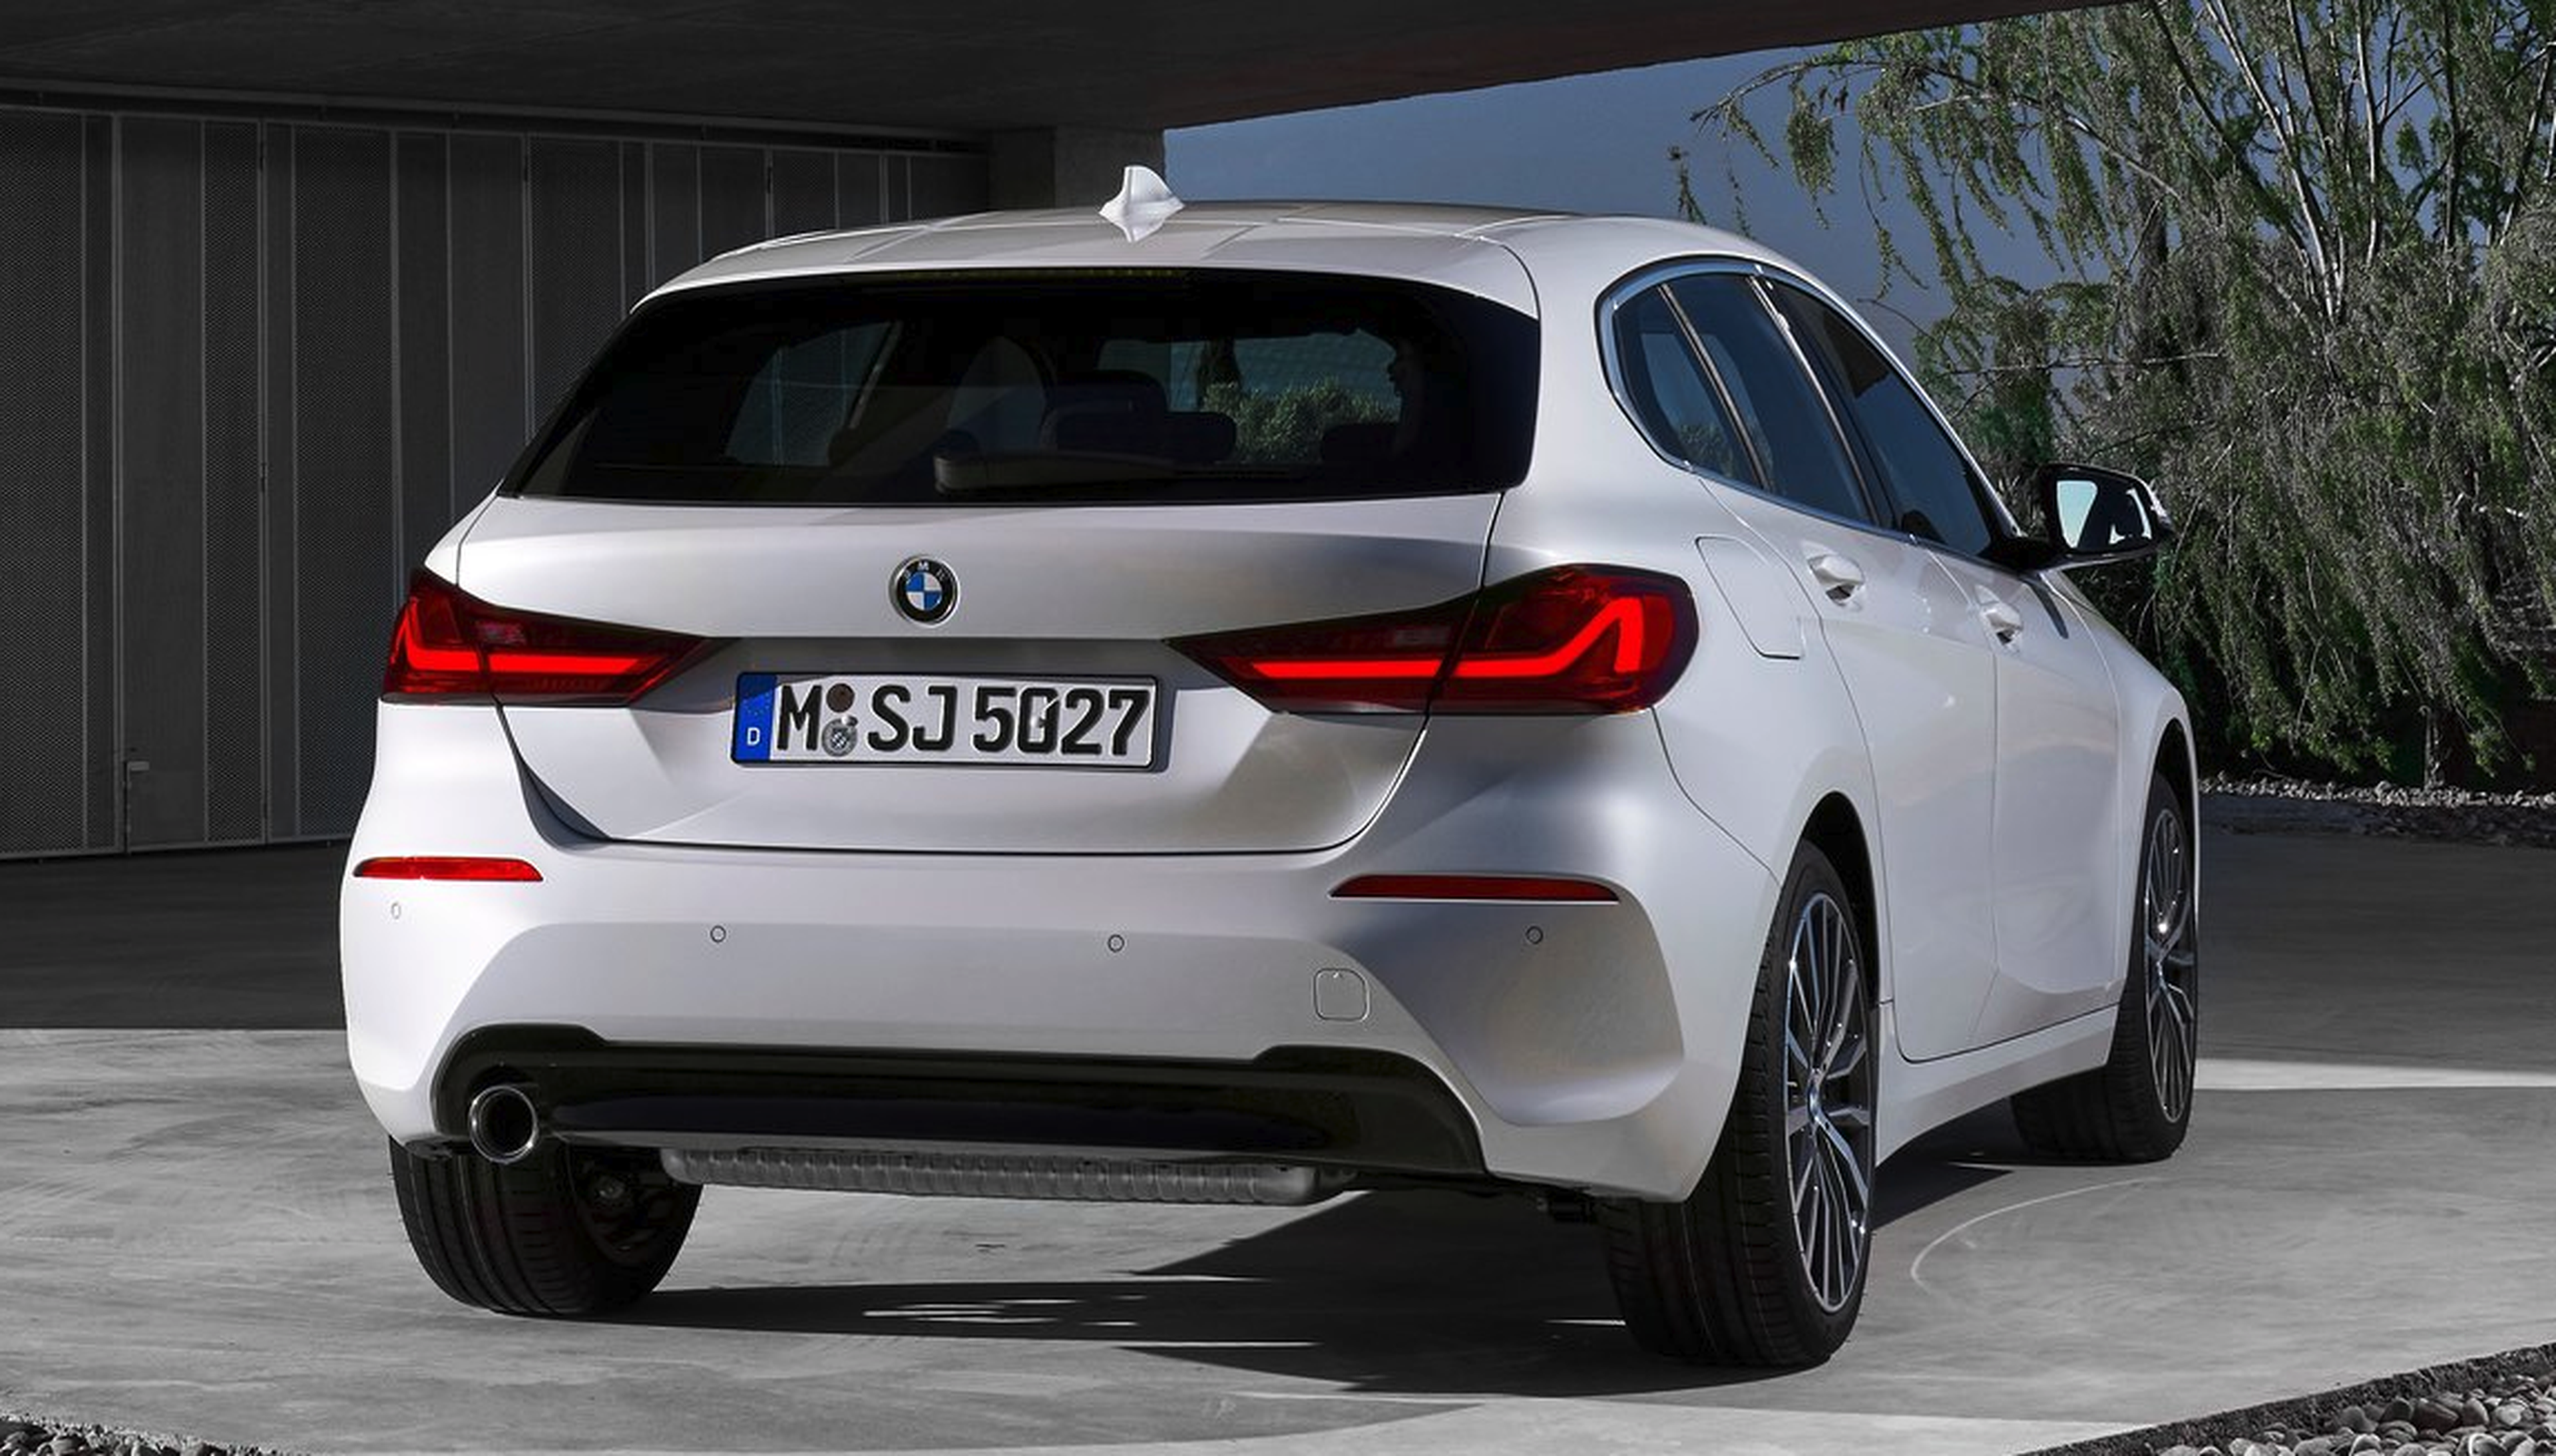 Prueba: BMW Serie 1 2019. ¡Ya lo hemos conducido!